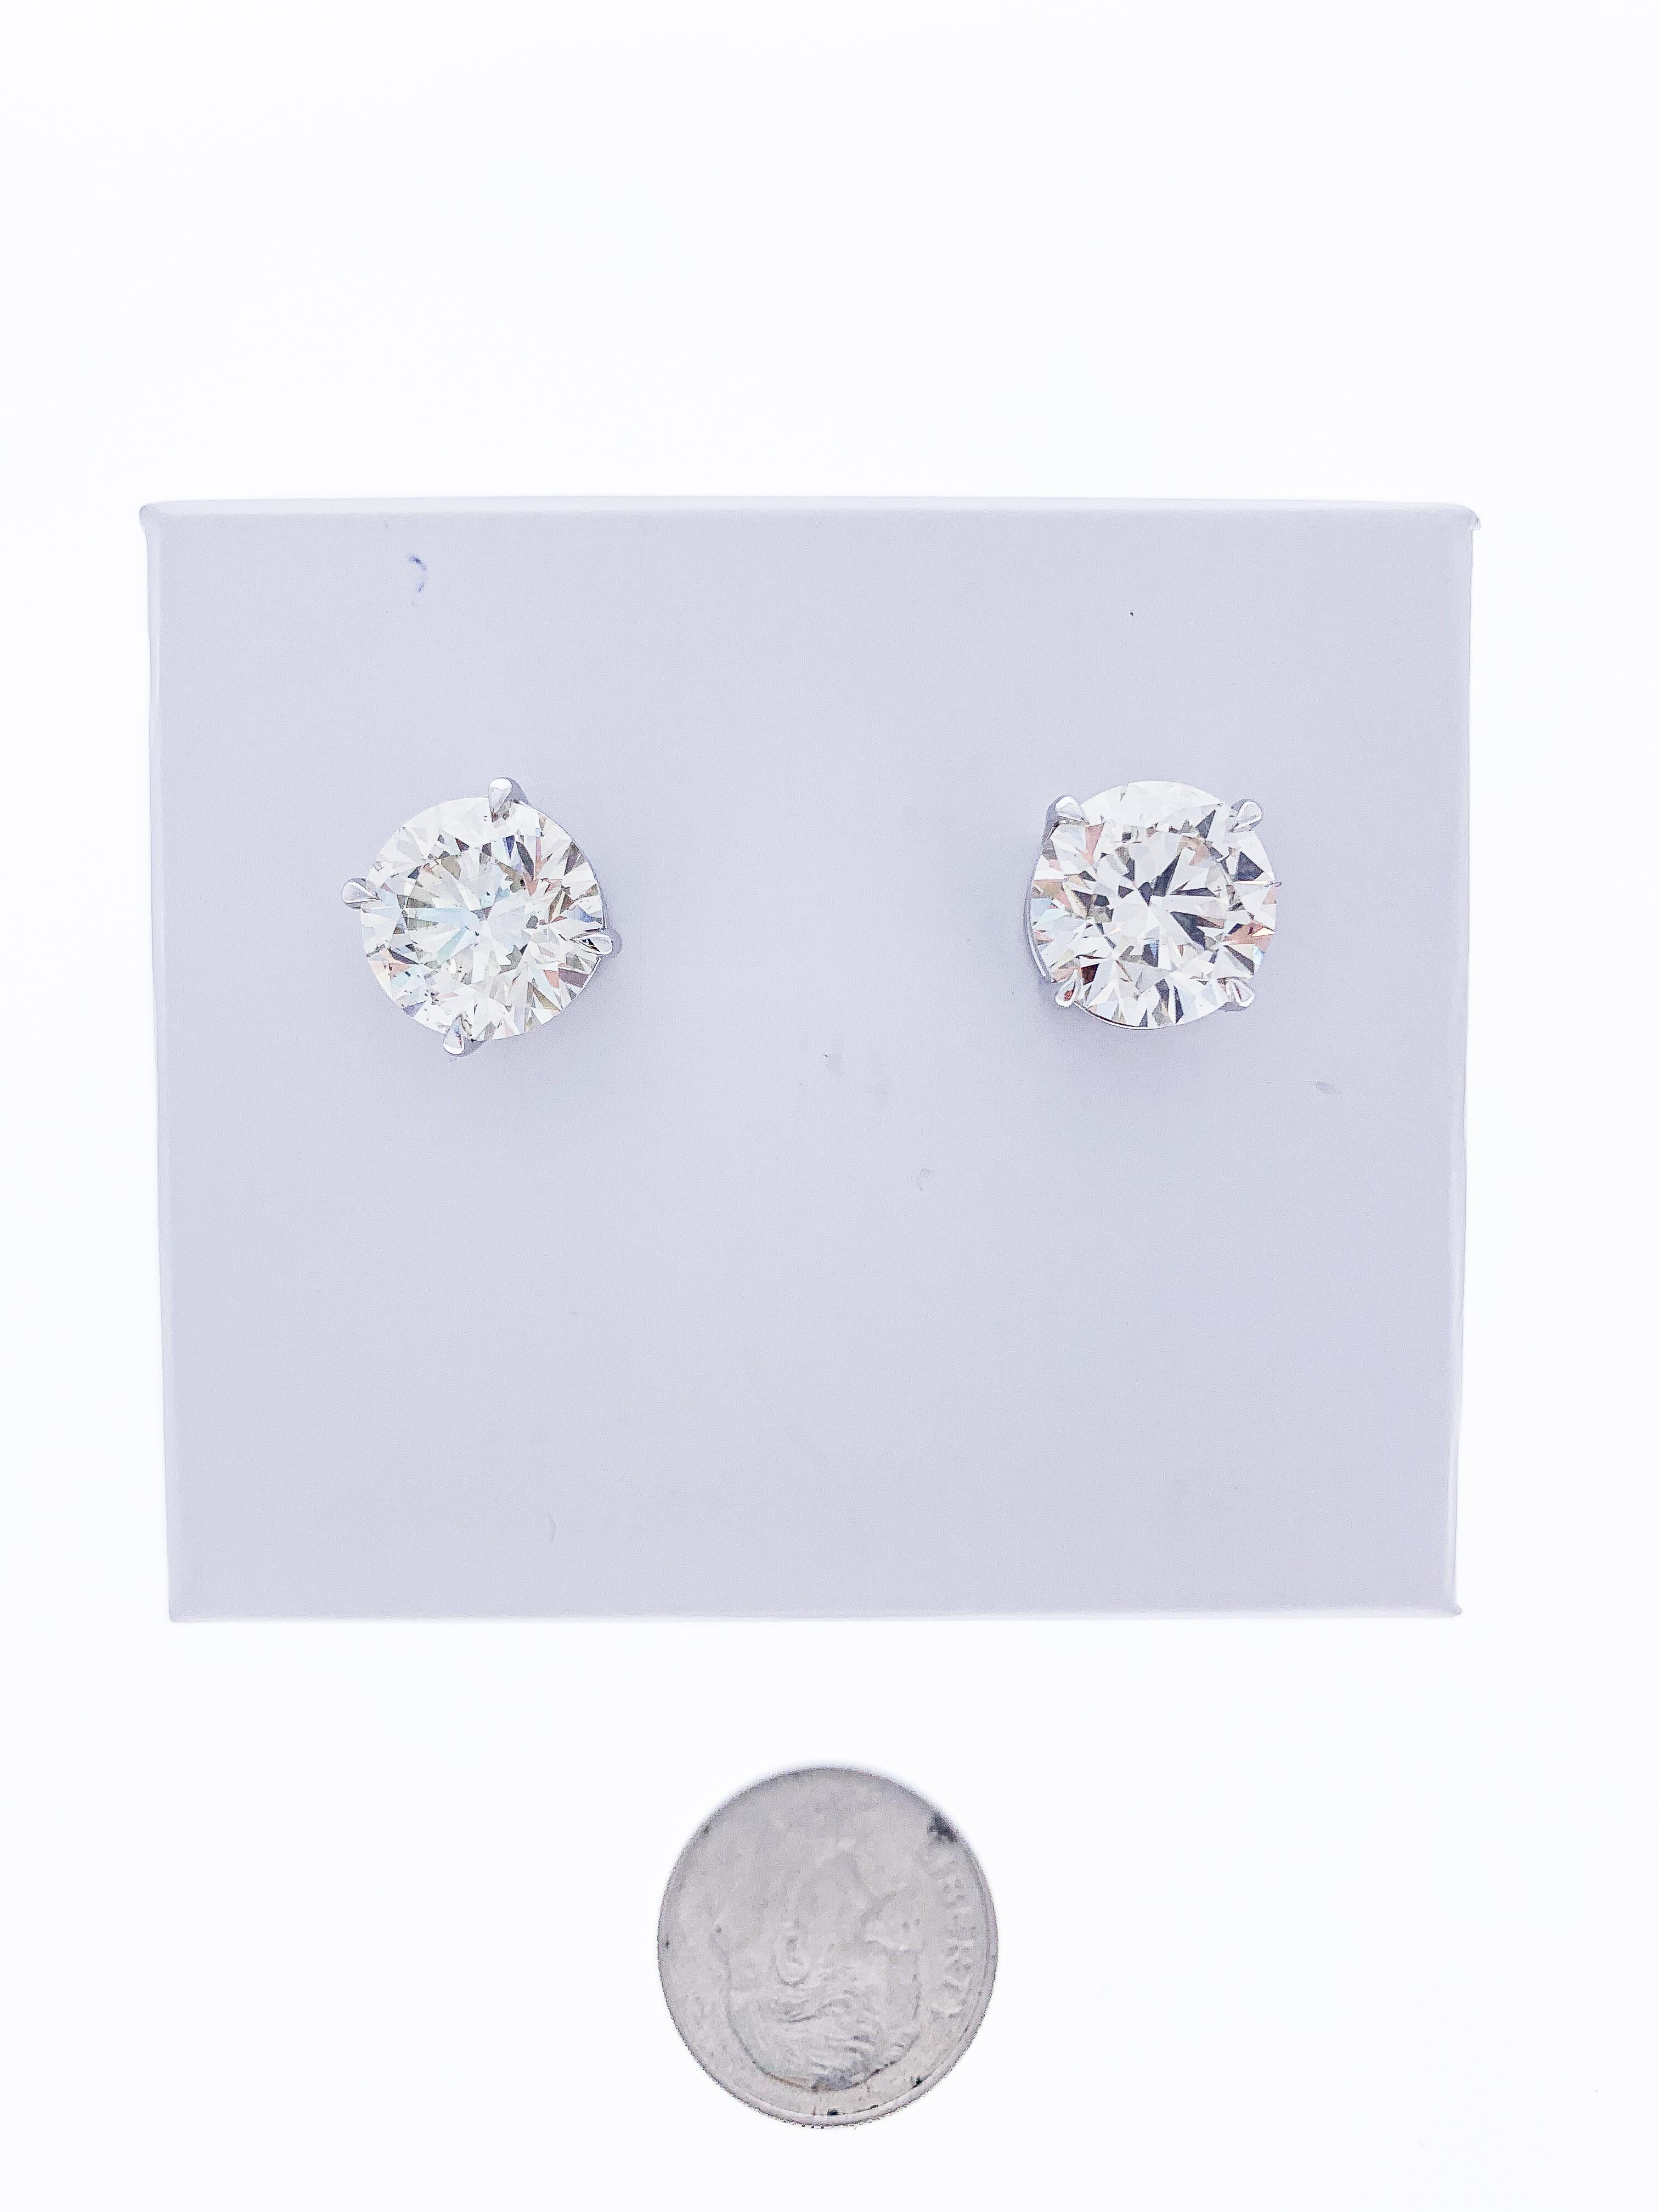 Contemporary EGL USA Certified 10.17 Carat Total Diamond Stud Earrings in 14 Karat White Gold